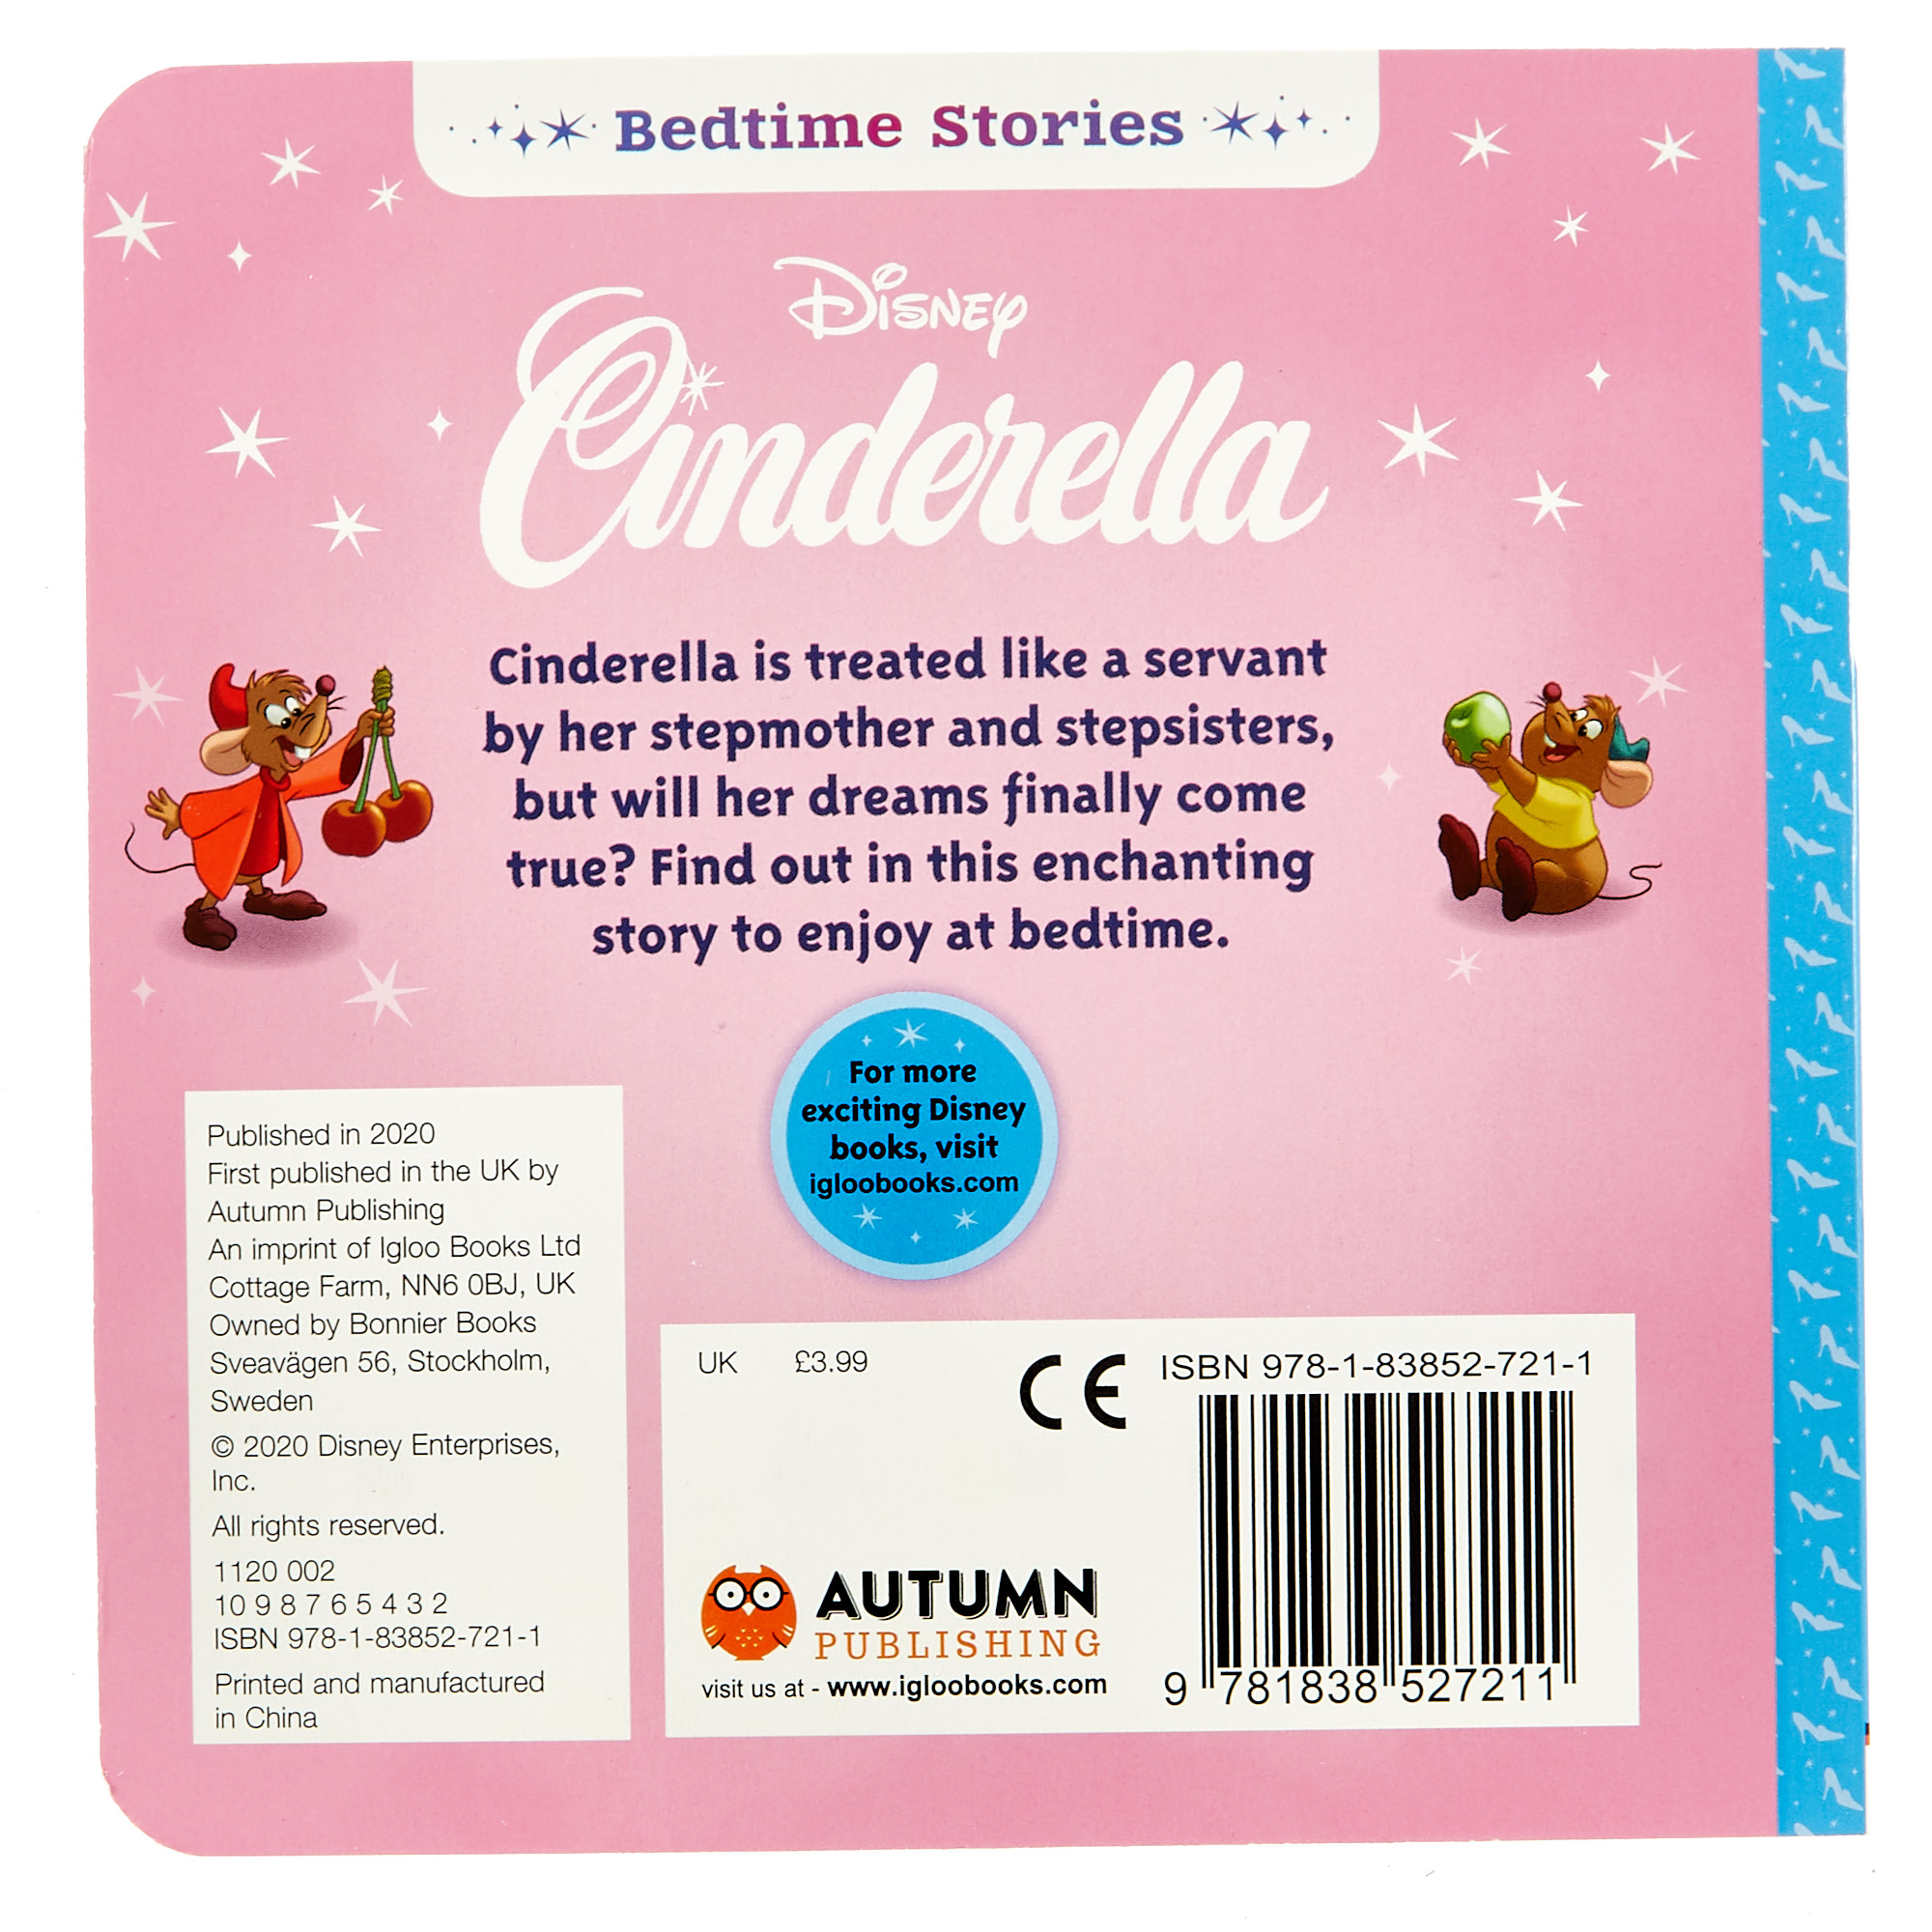 Disney Bedtime Stories - Cinderella Book